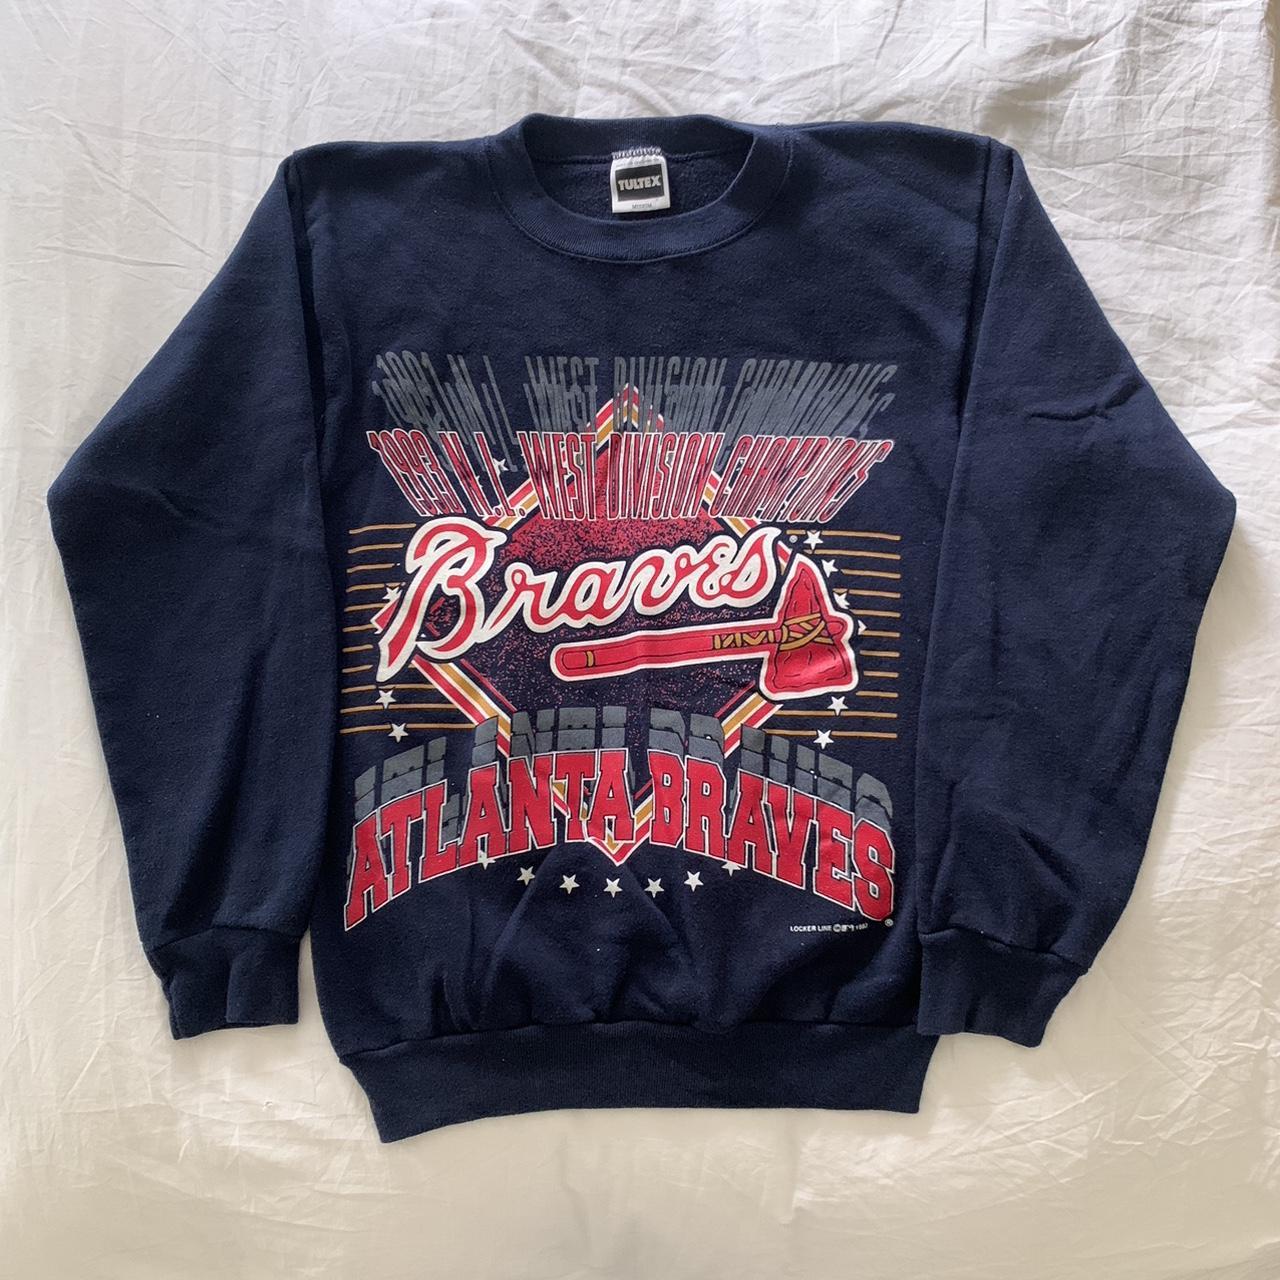 Vintage ATLANTA BRAVES Crew Neck sweatshirt - Depop